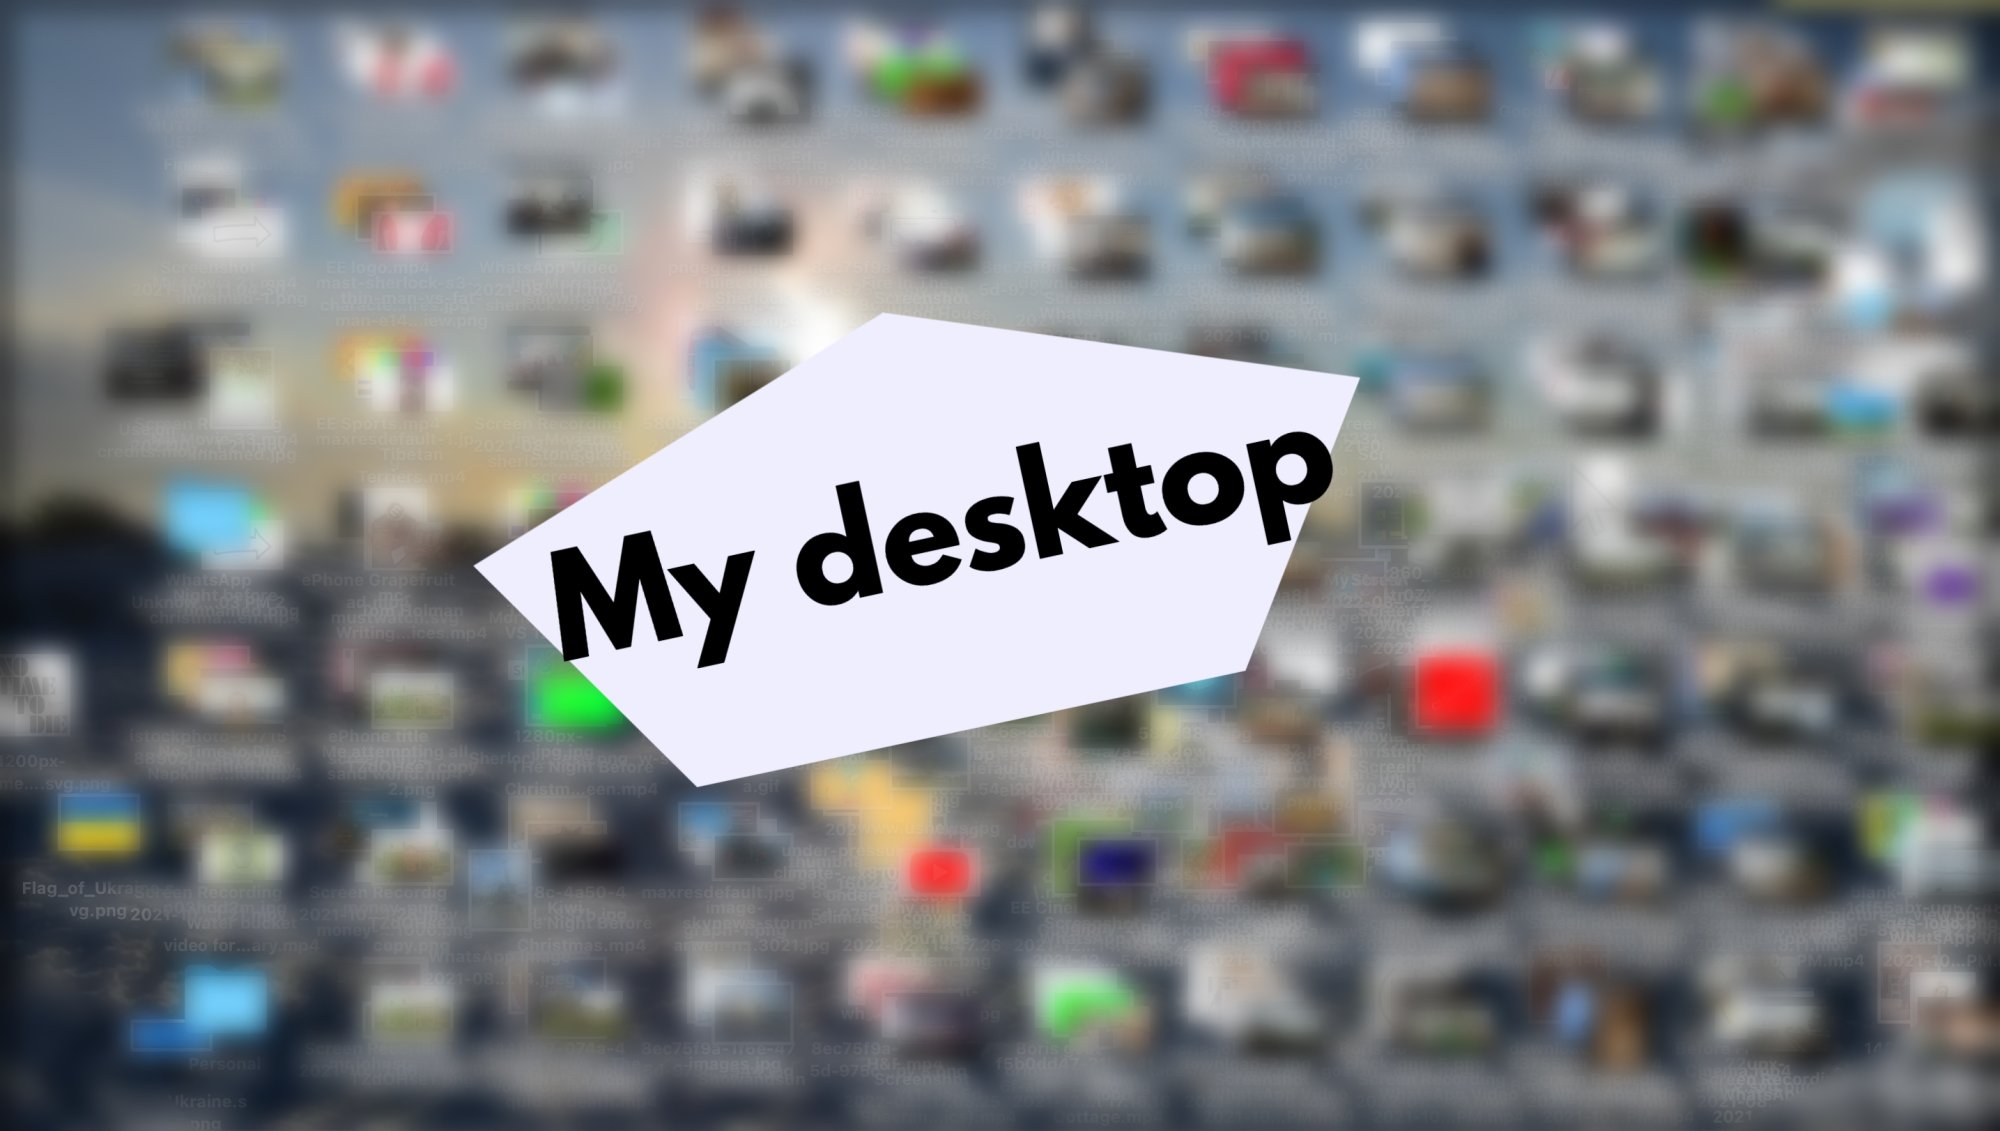 My desktop is a bit messy xd